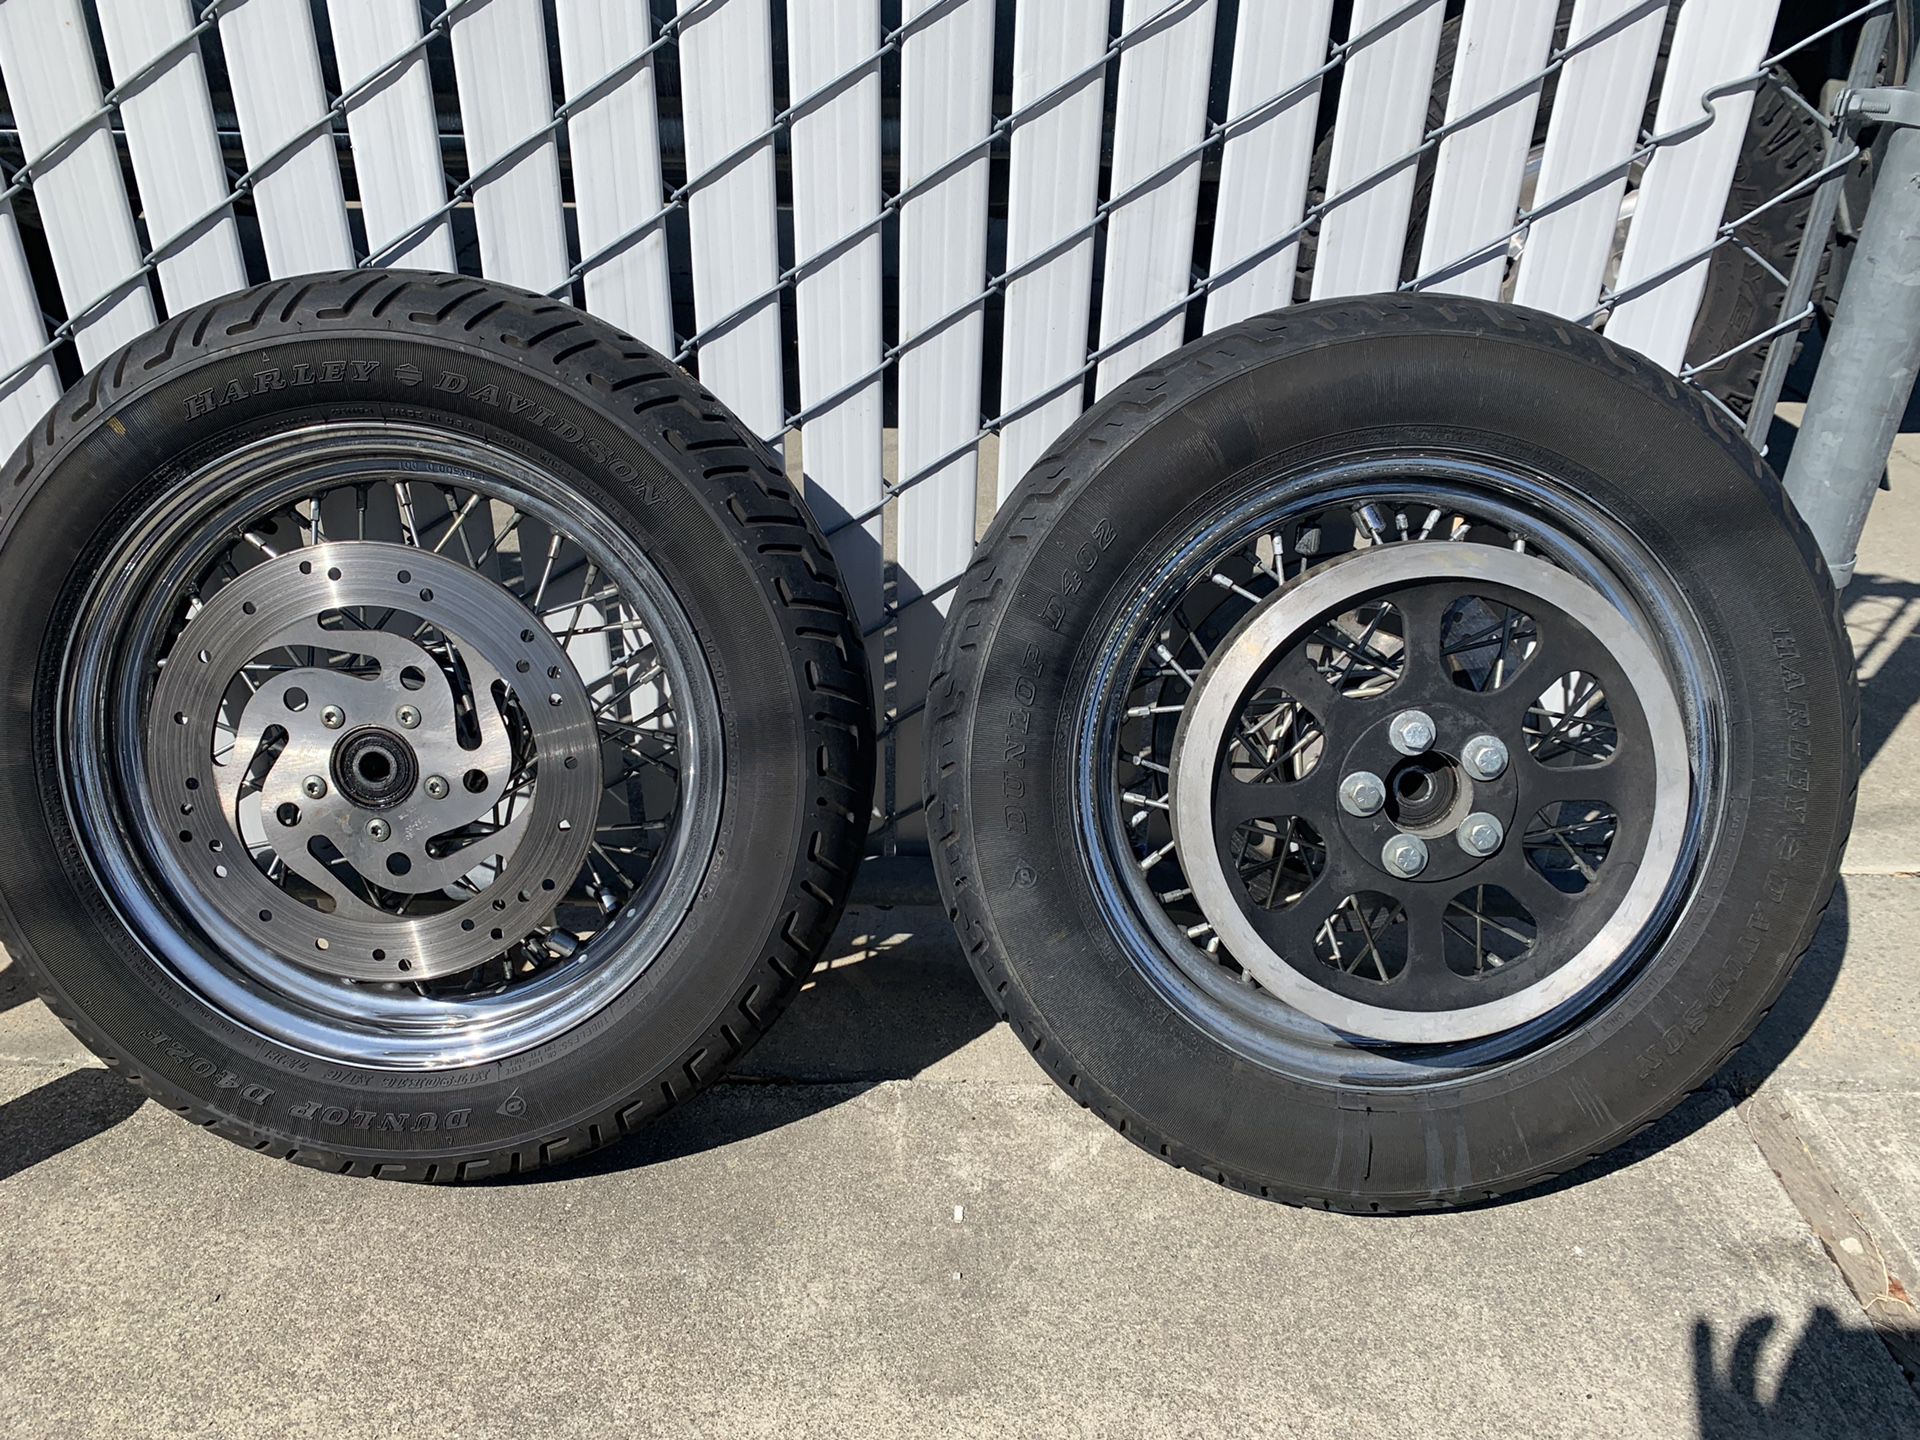 Harley spoke wheels and tires